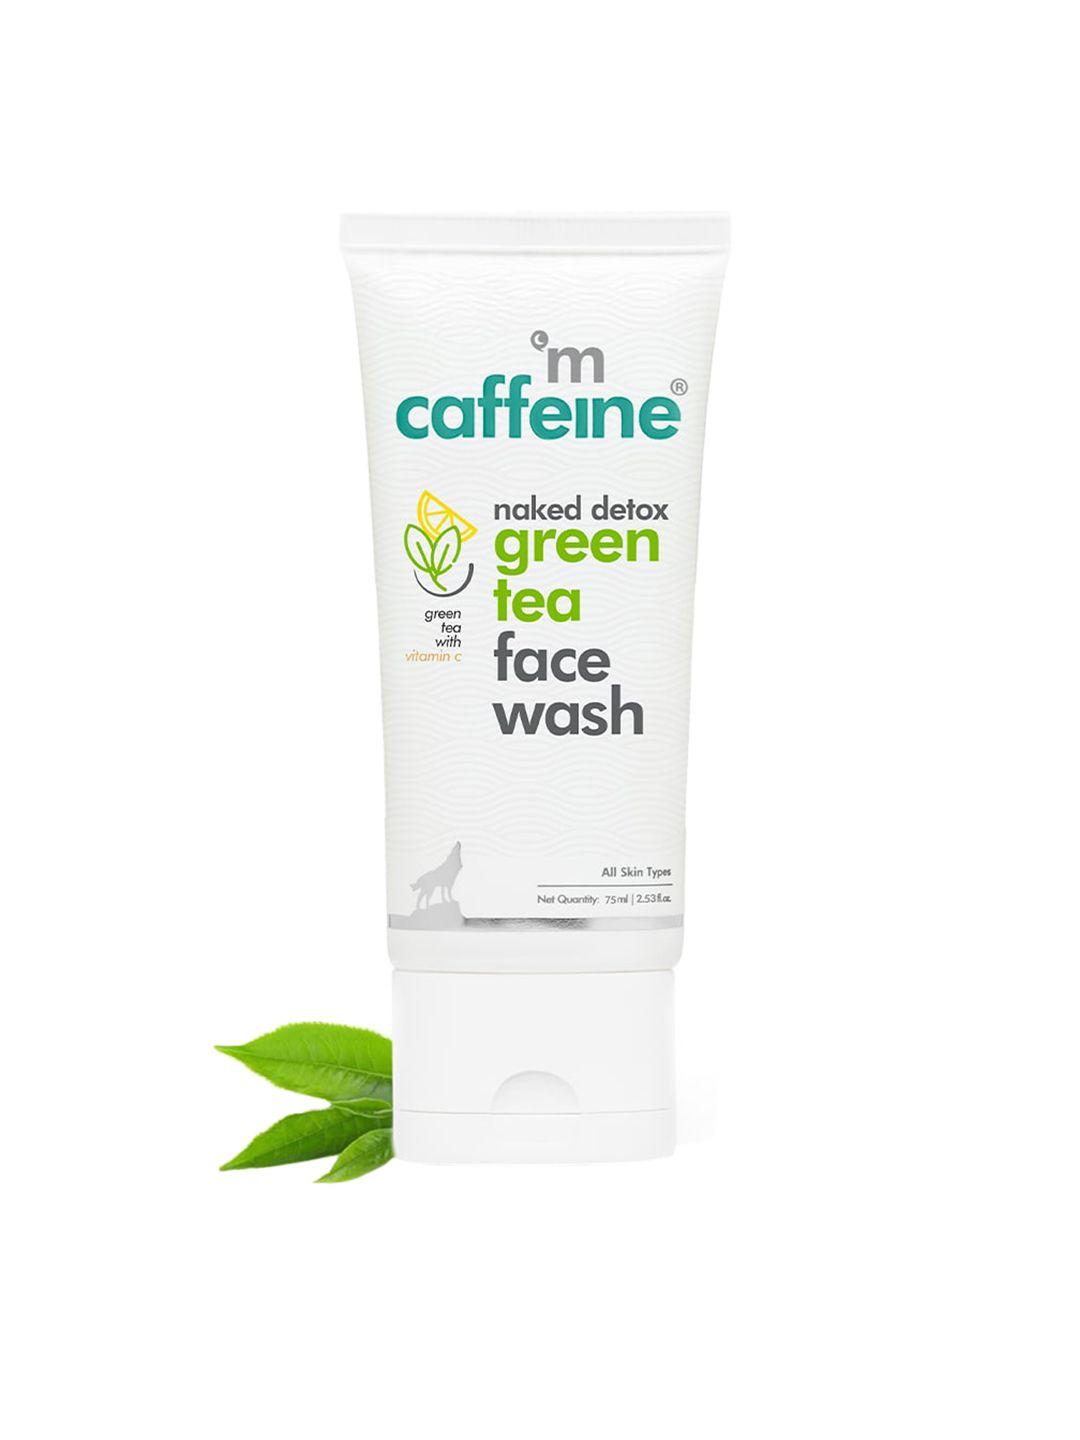 mcaffeine naked detox green tea face wash with vitamin c - 75 ml